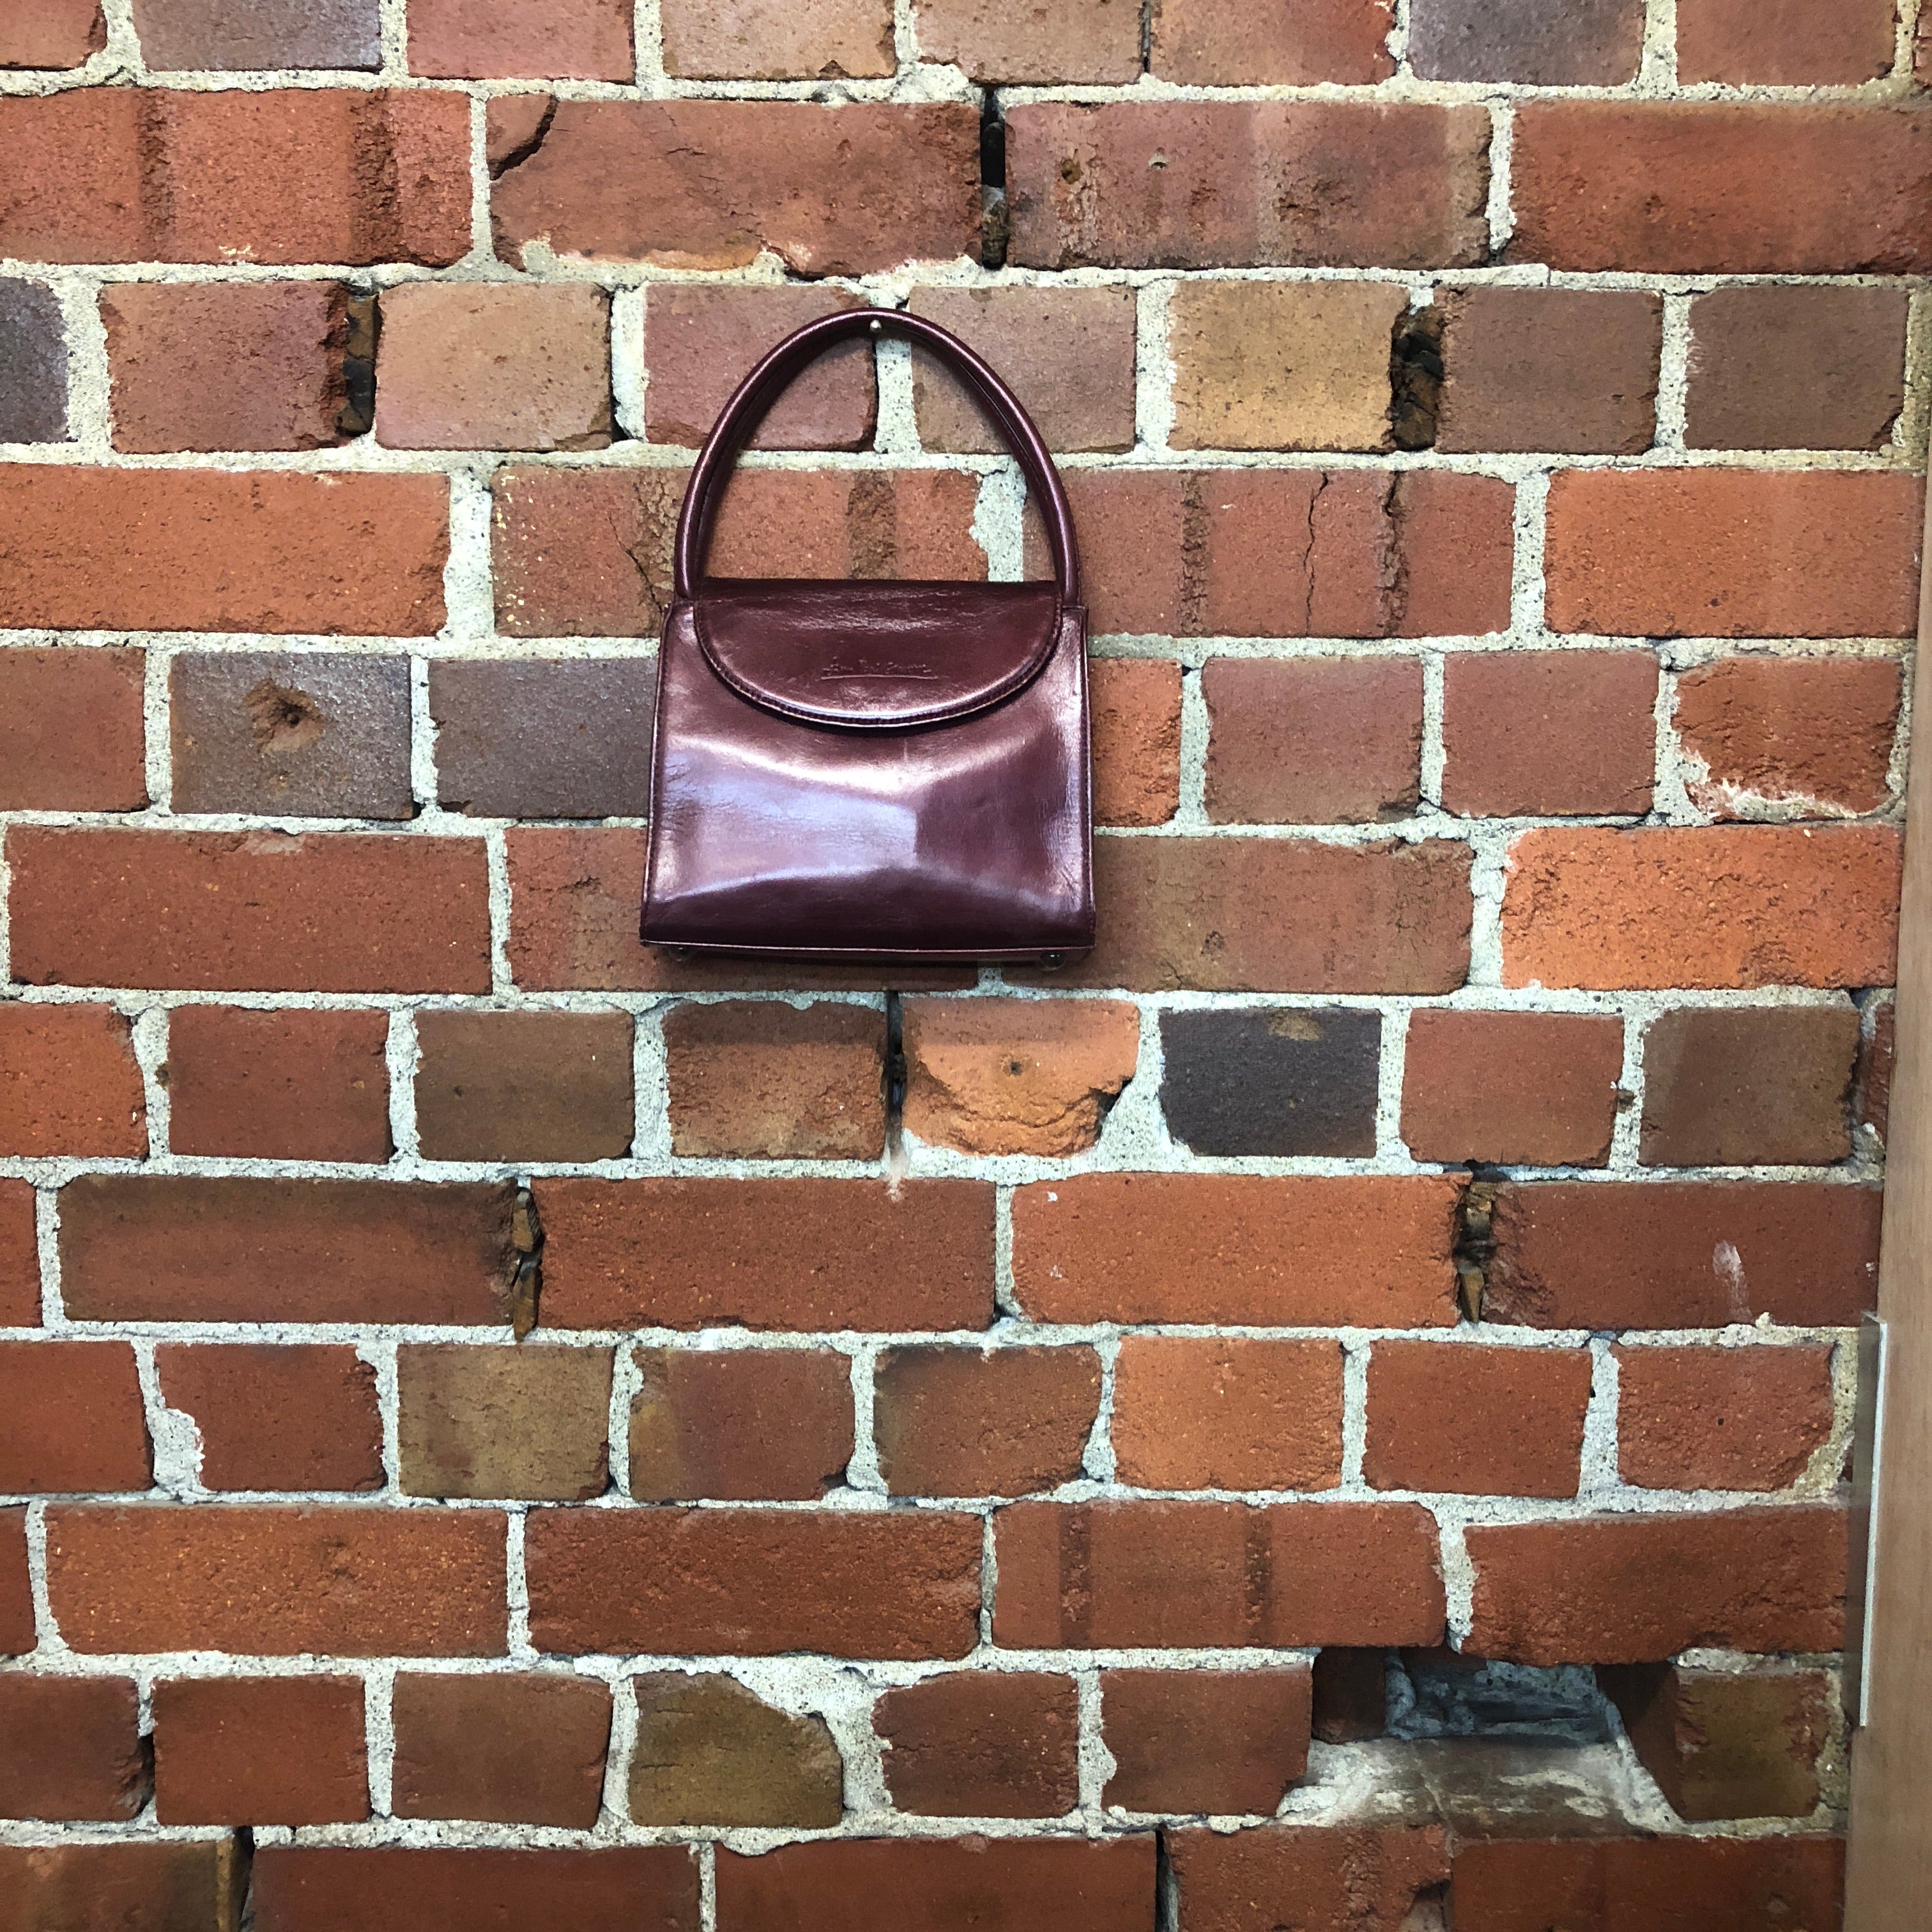 JEan Paul Gaultier 1990s mini leather handbag